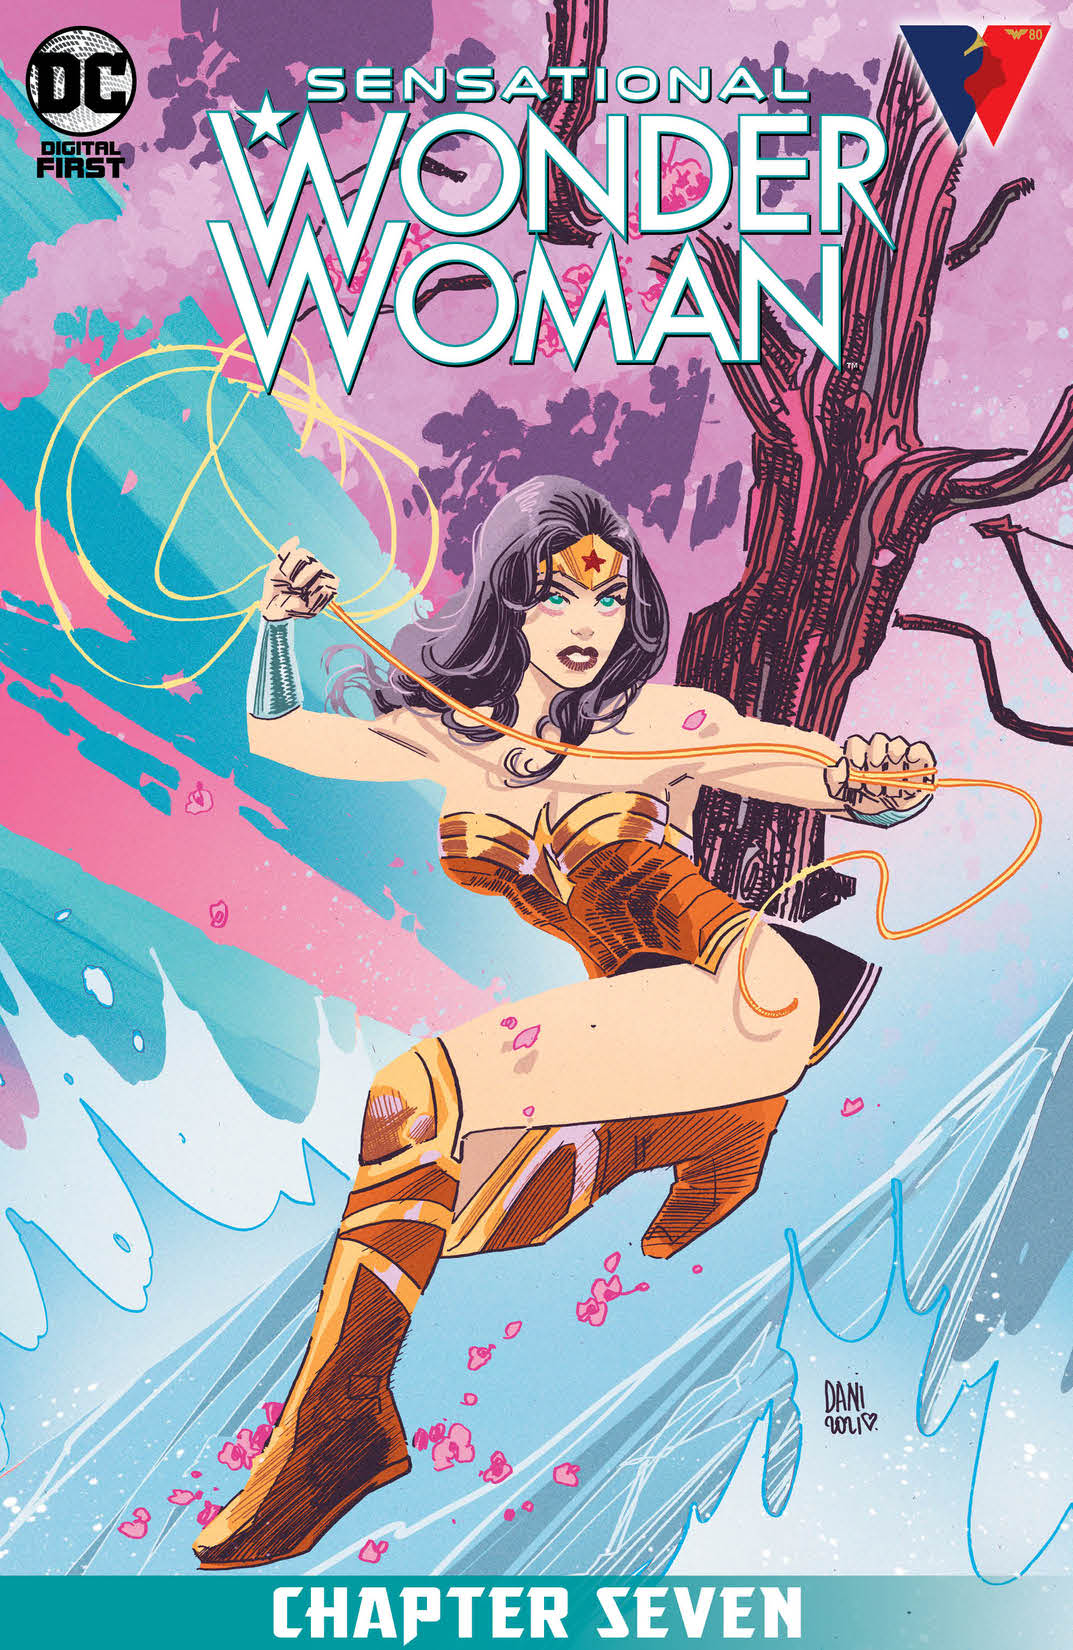 Sensational Wonder Woman #7 preview images